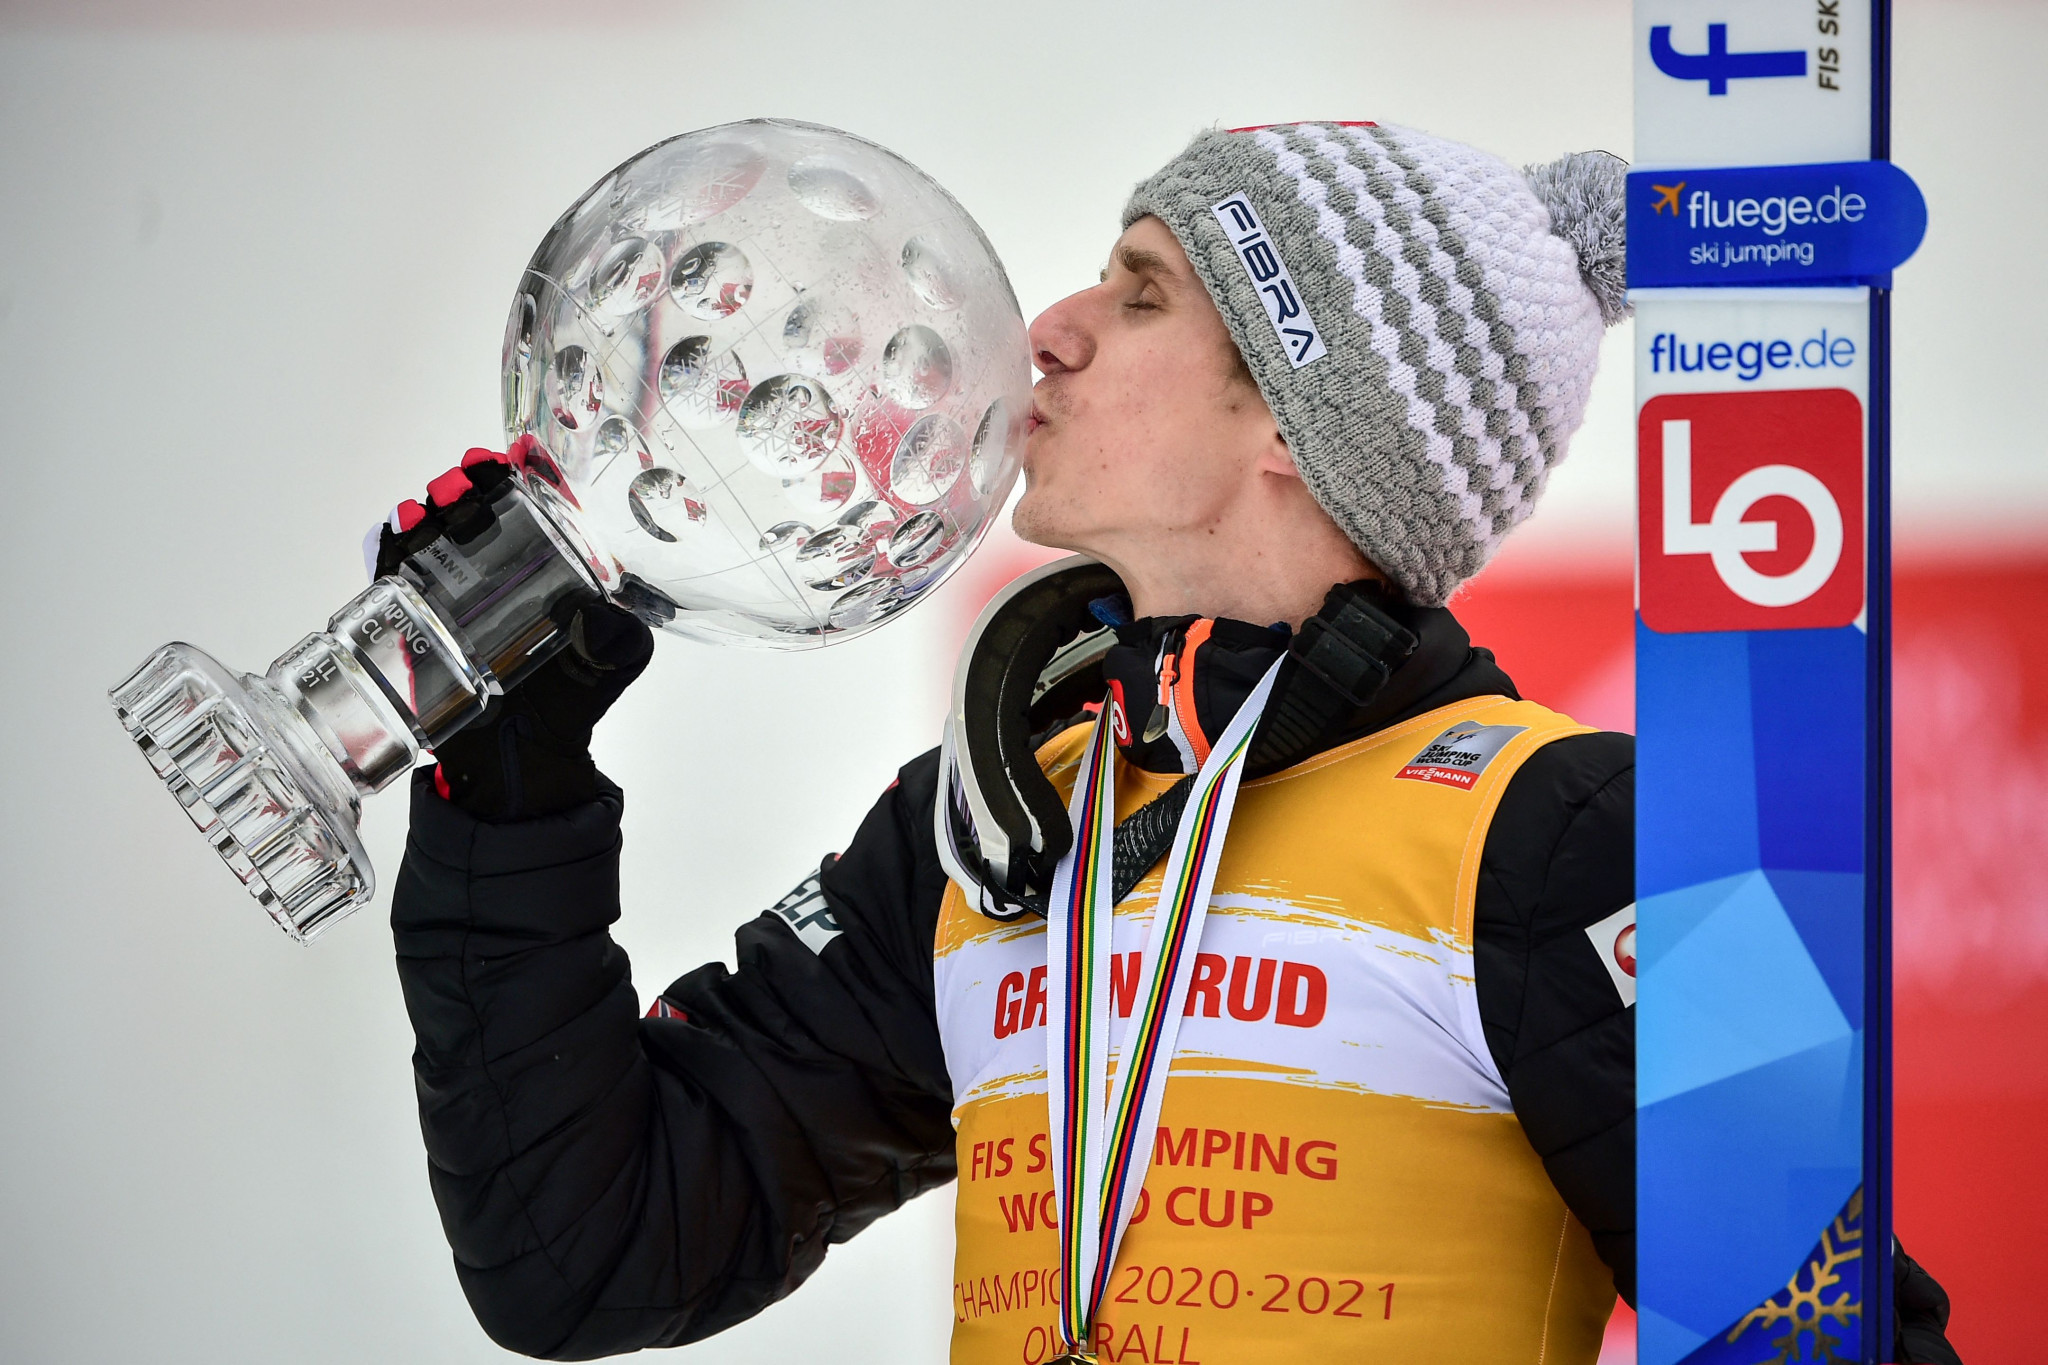 Halvor Egner Granerud won the crystal globe last season ©Getty Images